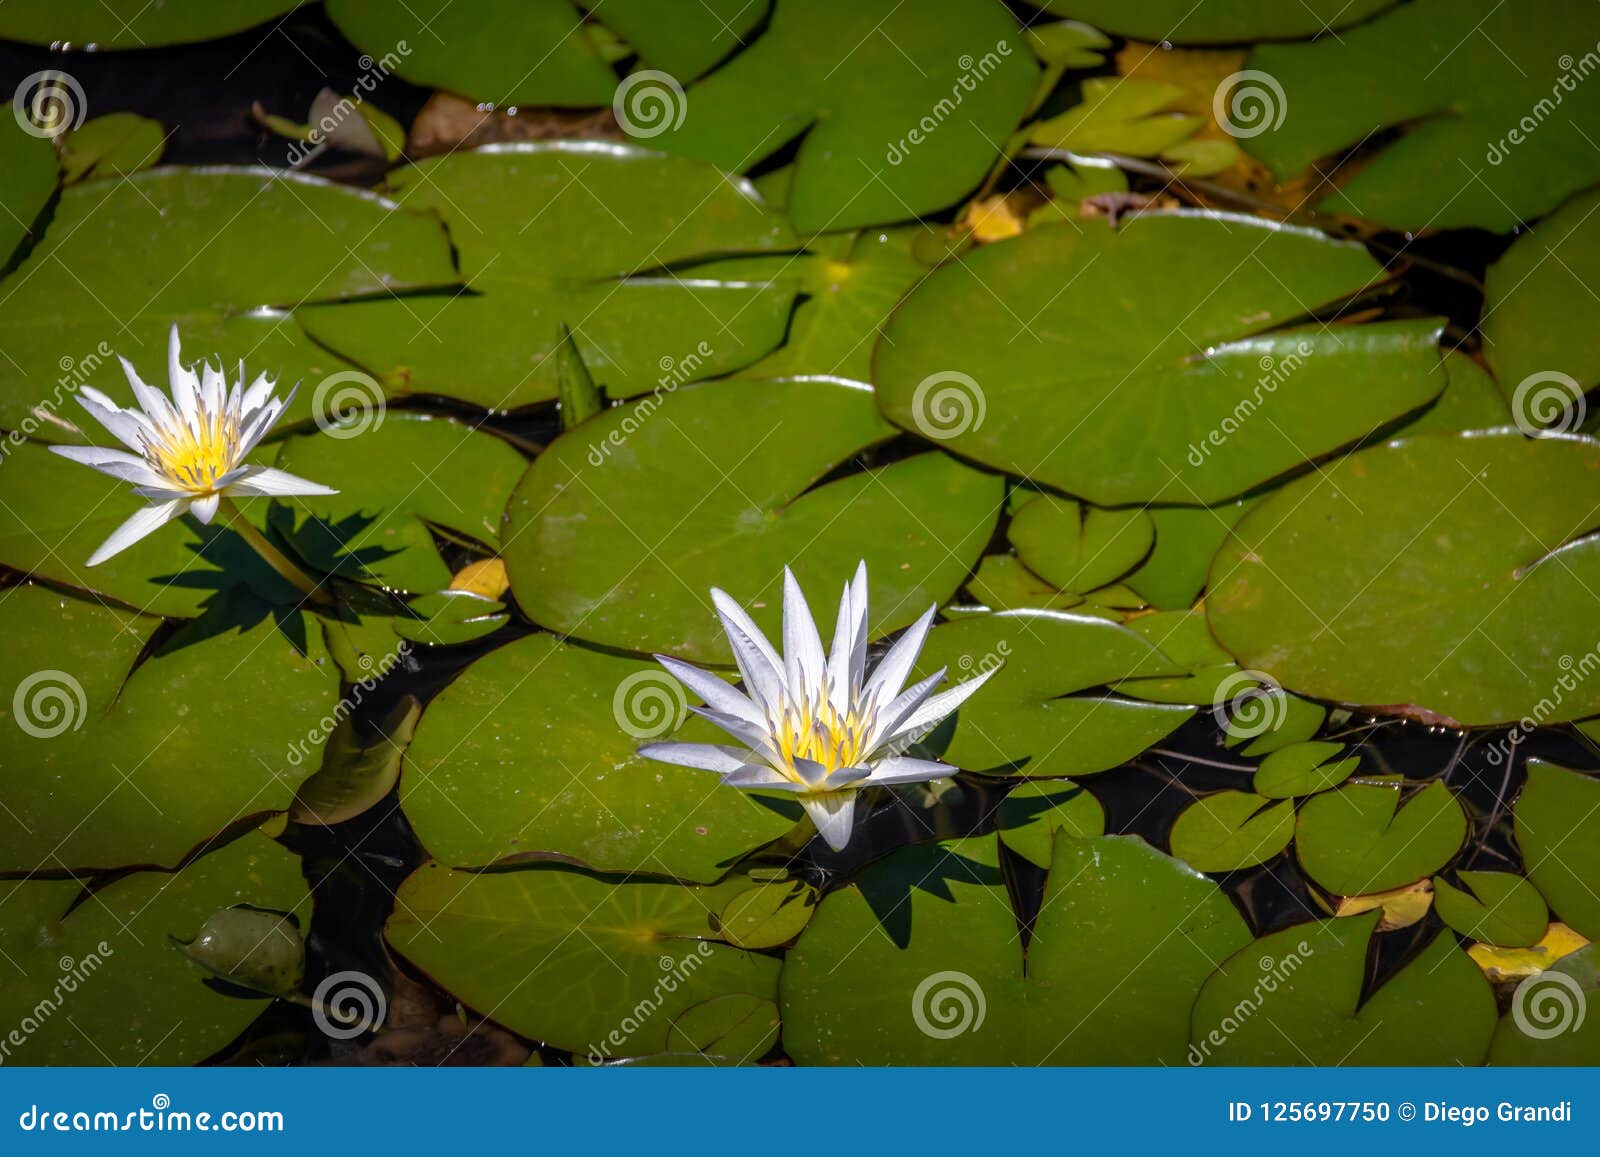 nymphaea lotus flower at itamaraty palace pond - brasilia, distrito federal, brazil